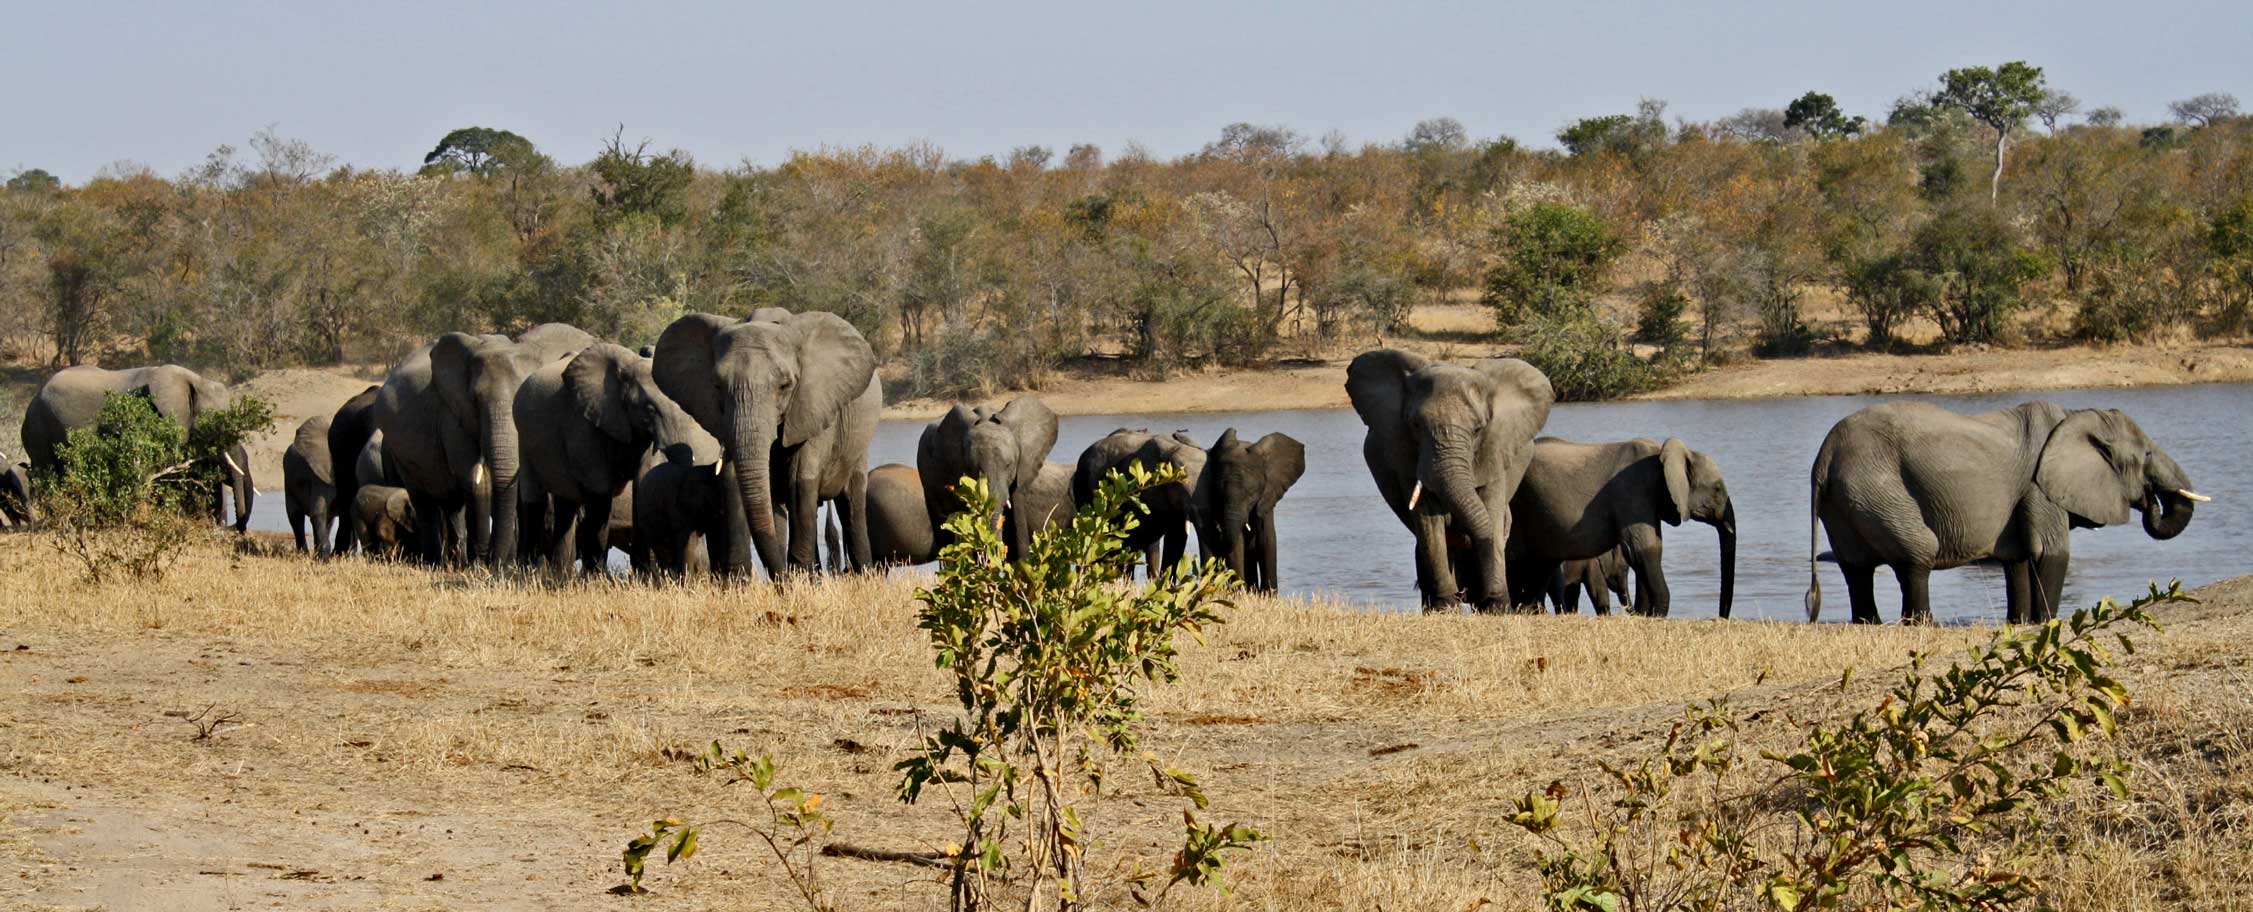 Why visit the Kruger National Park - Africa Adventure Travels